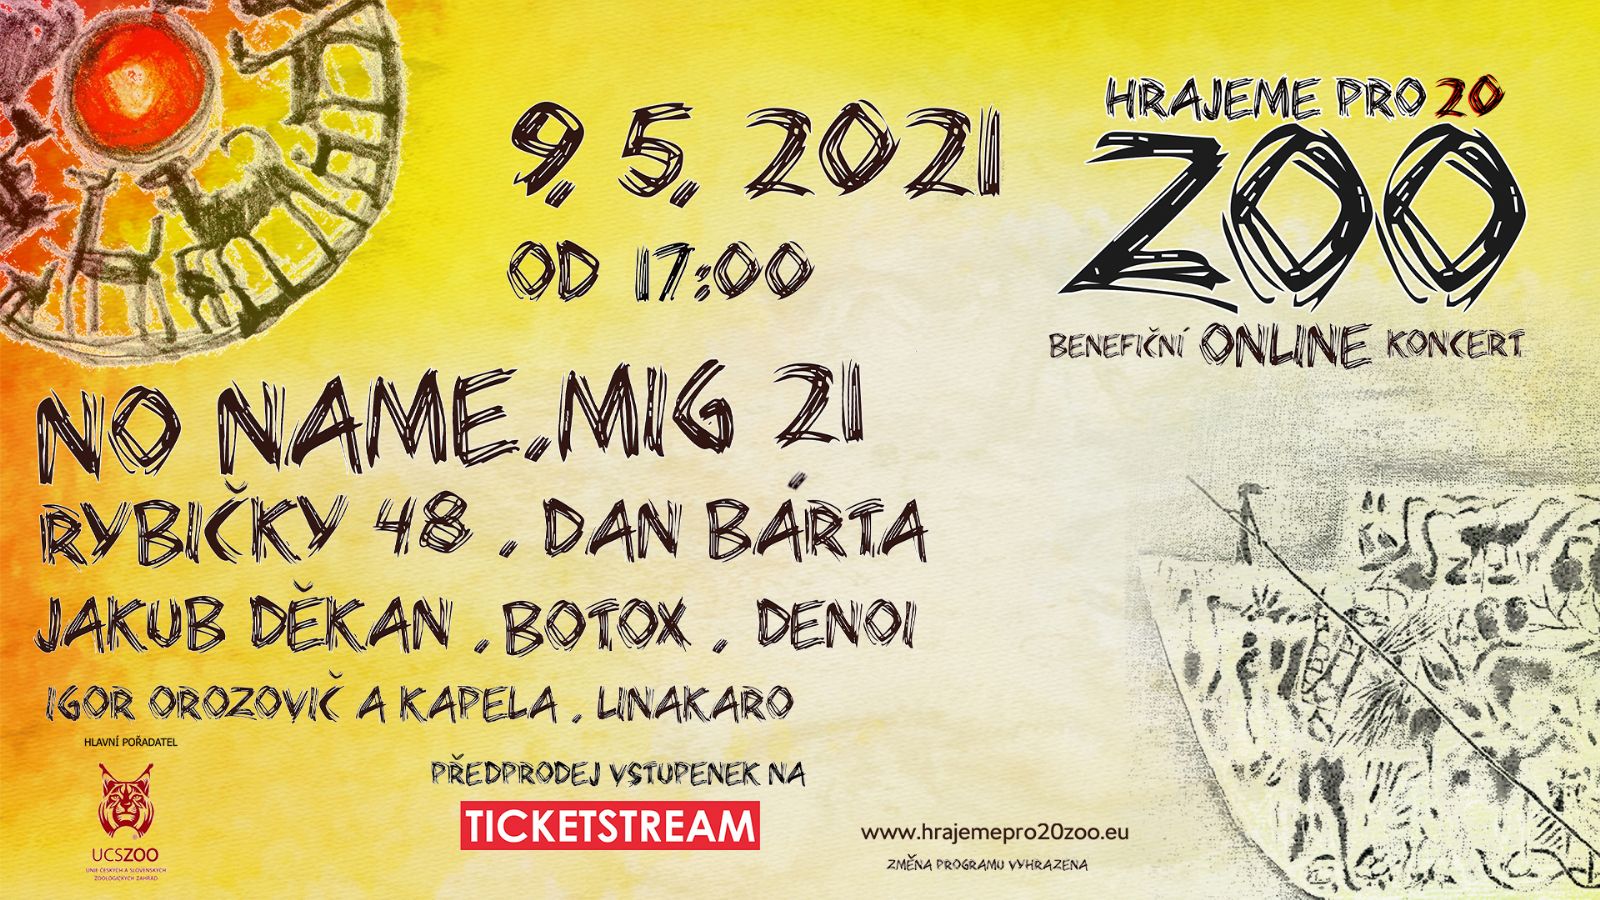 Benefiční online koncert „Hrajeme pro 20 zoo“